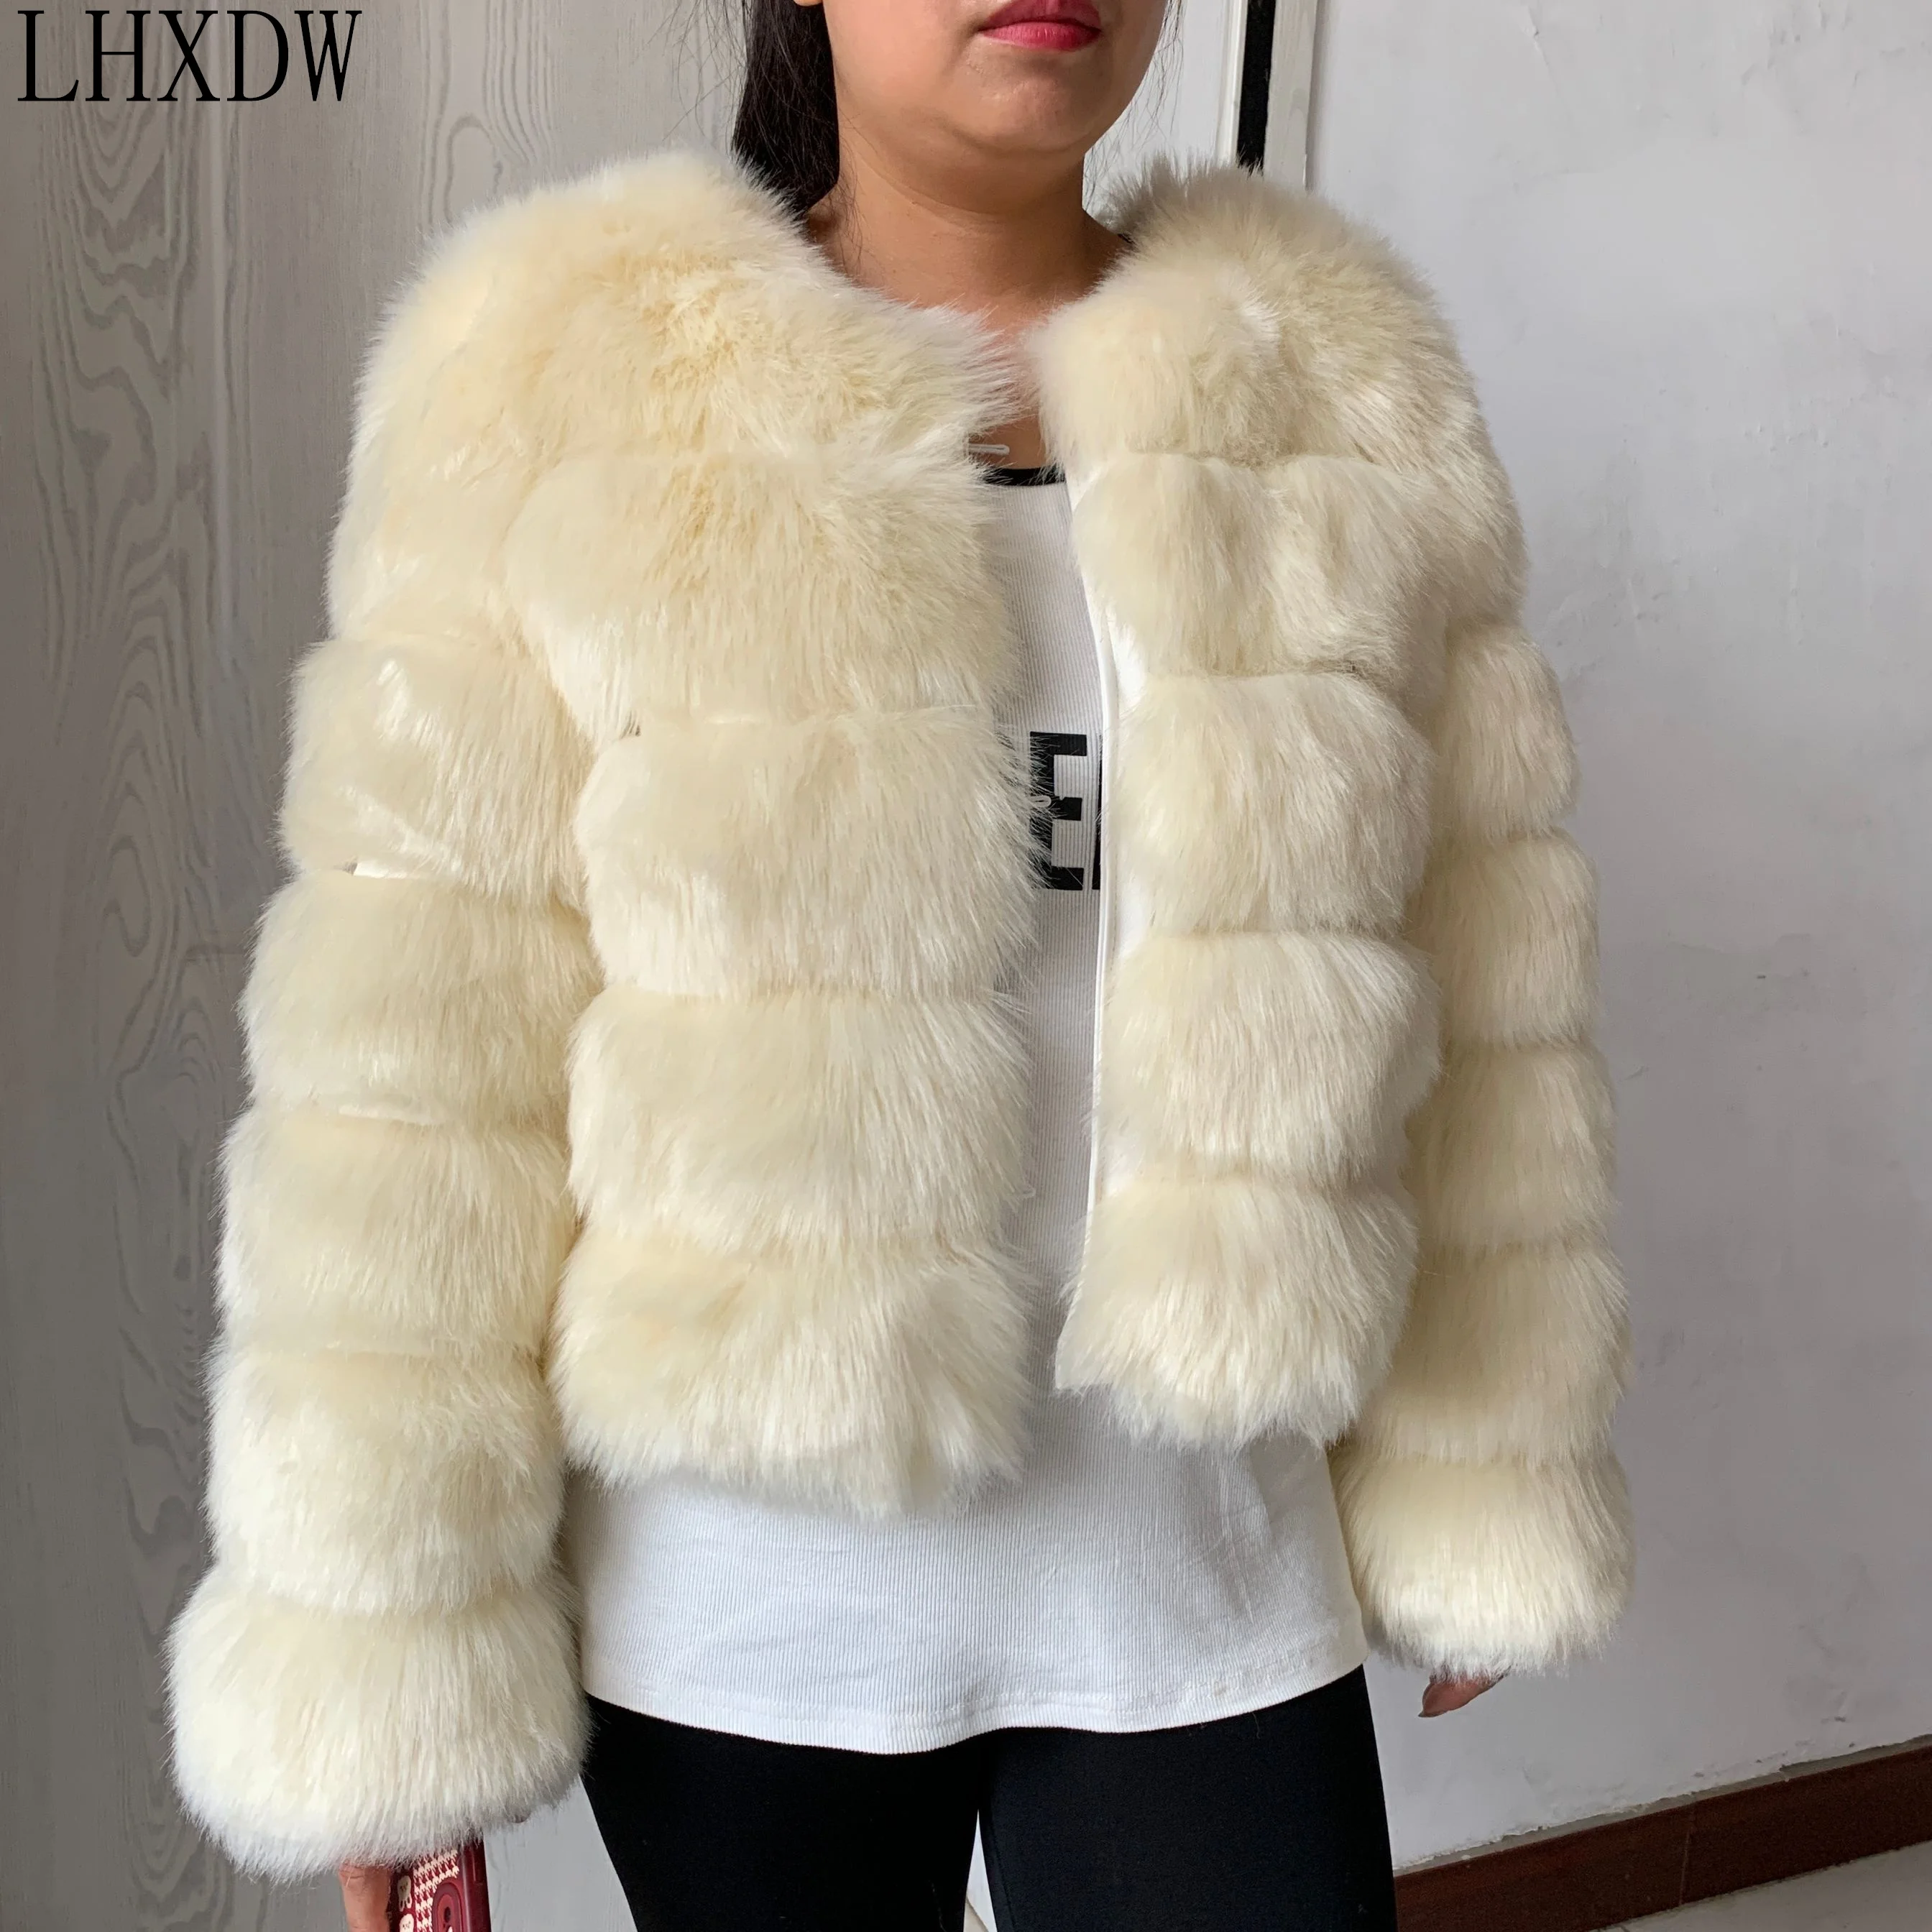 

LHXDW Women's Winter Artificial Fox Fur Coat Fashion Fluff Faux Fur Coat Short Sleeve and Long Sleeve Fox Fur Jacket False Fur